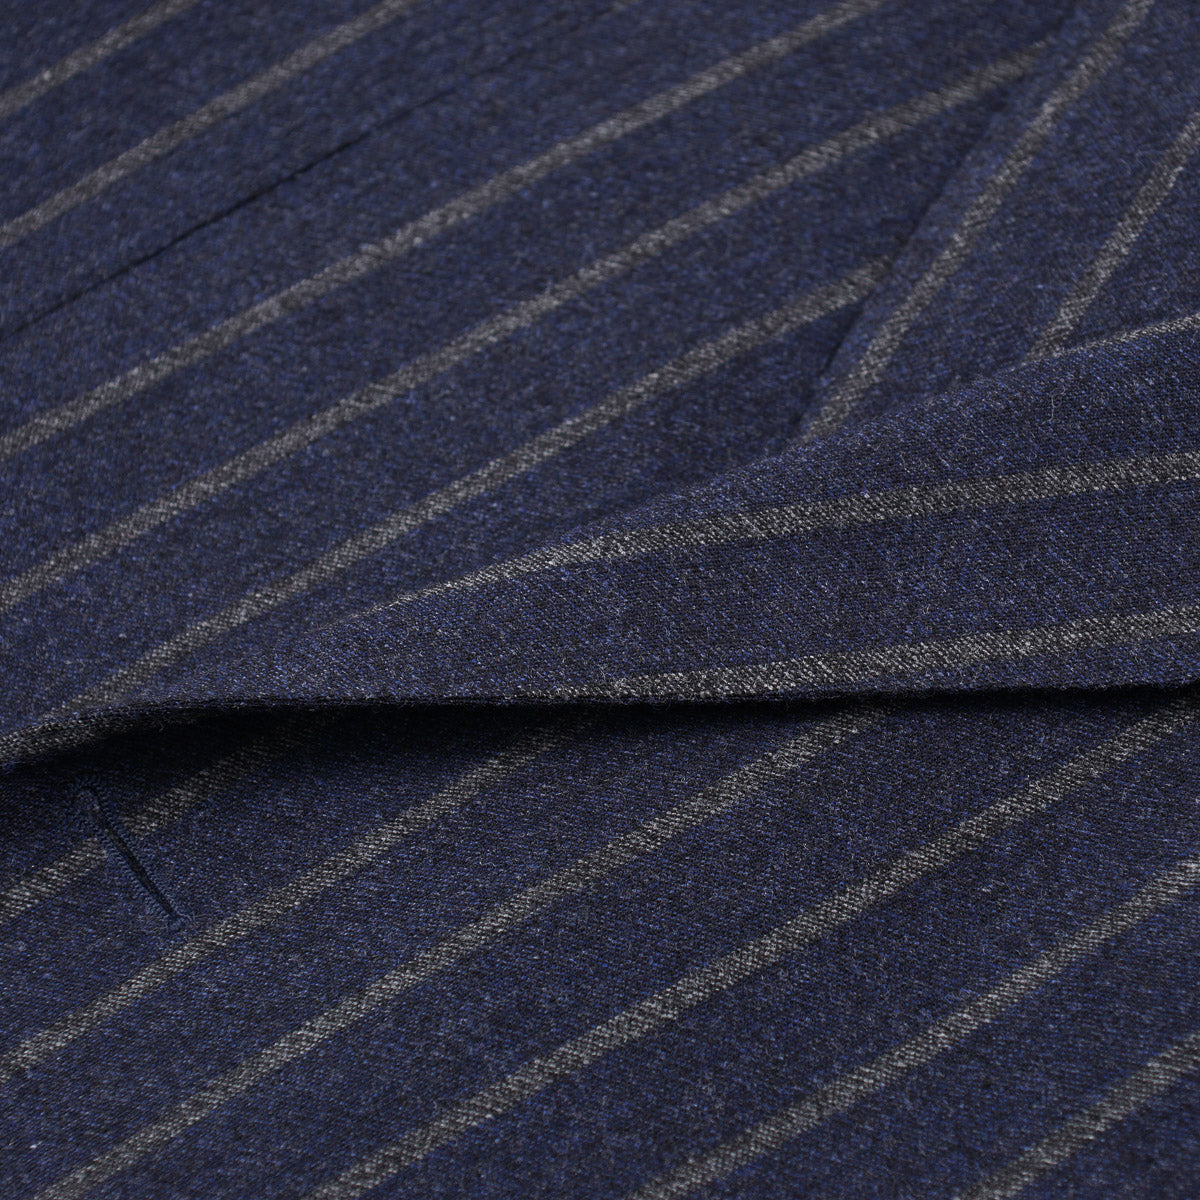 Sartorio Chalk Stripe Wool-Cashmere Suit - Top Shelf Apparel